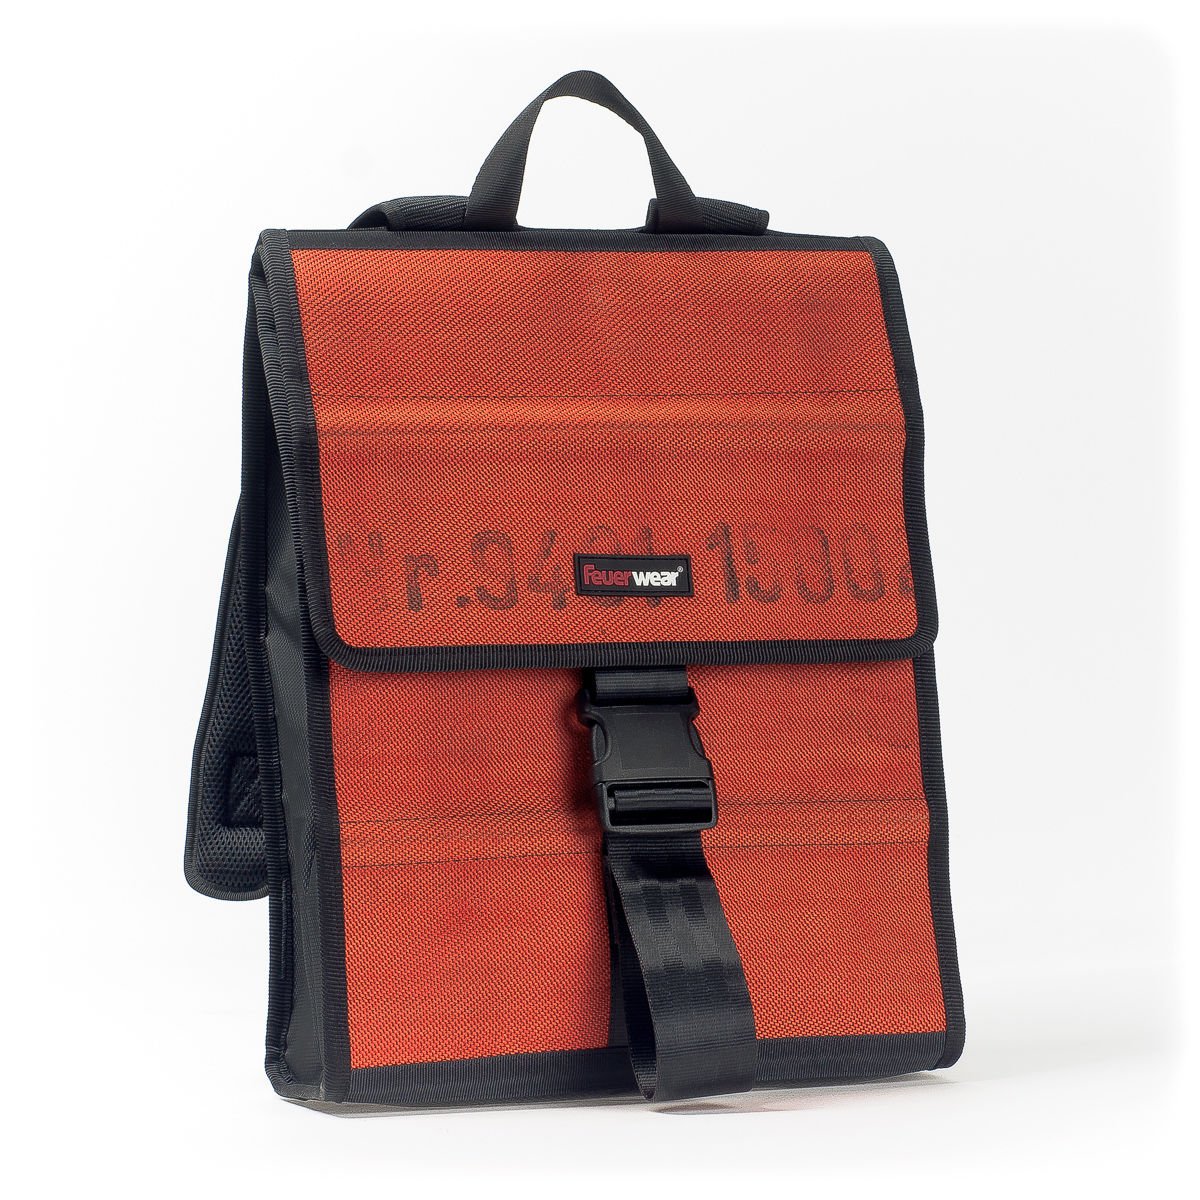 Feuerwear® Backpack Rucksack ERIC | Farbe: Weiß